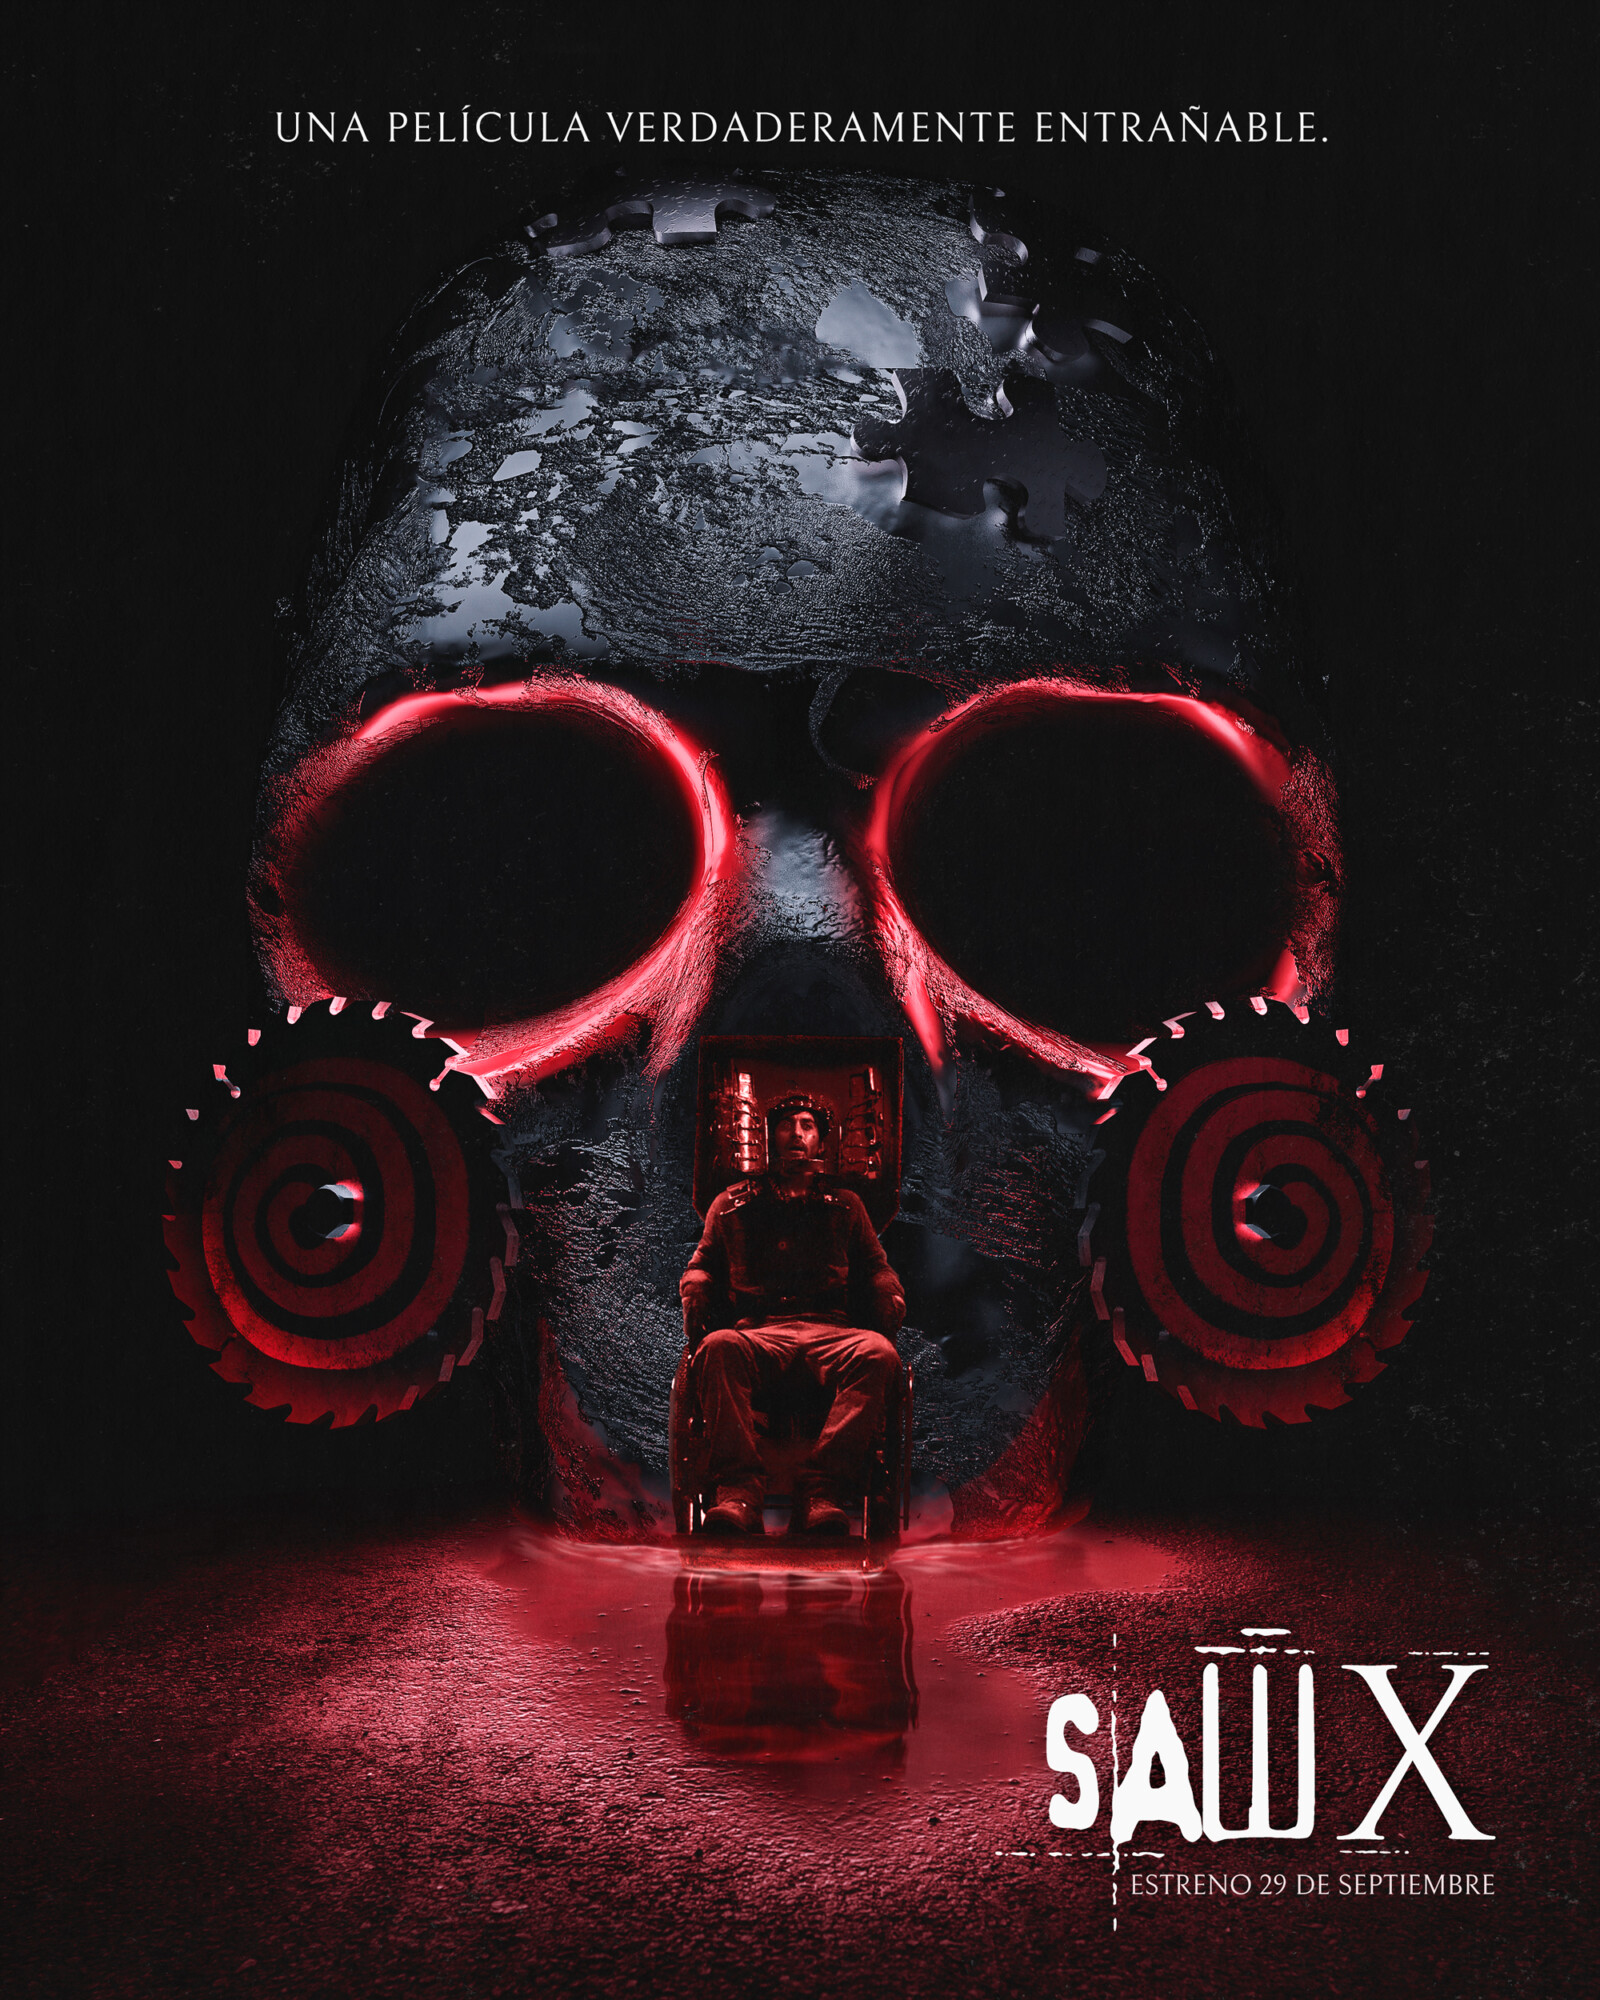 Saw X – Spain alt poster